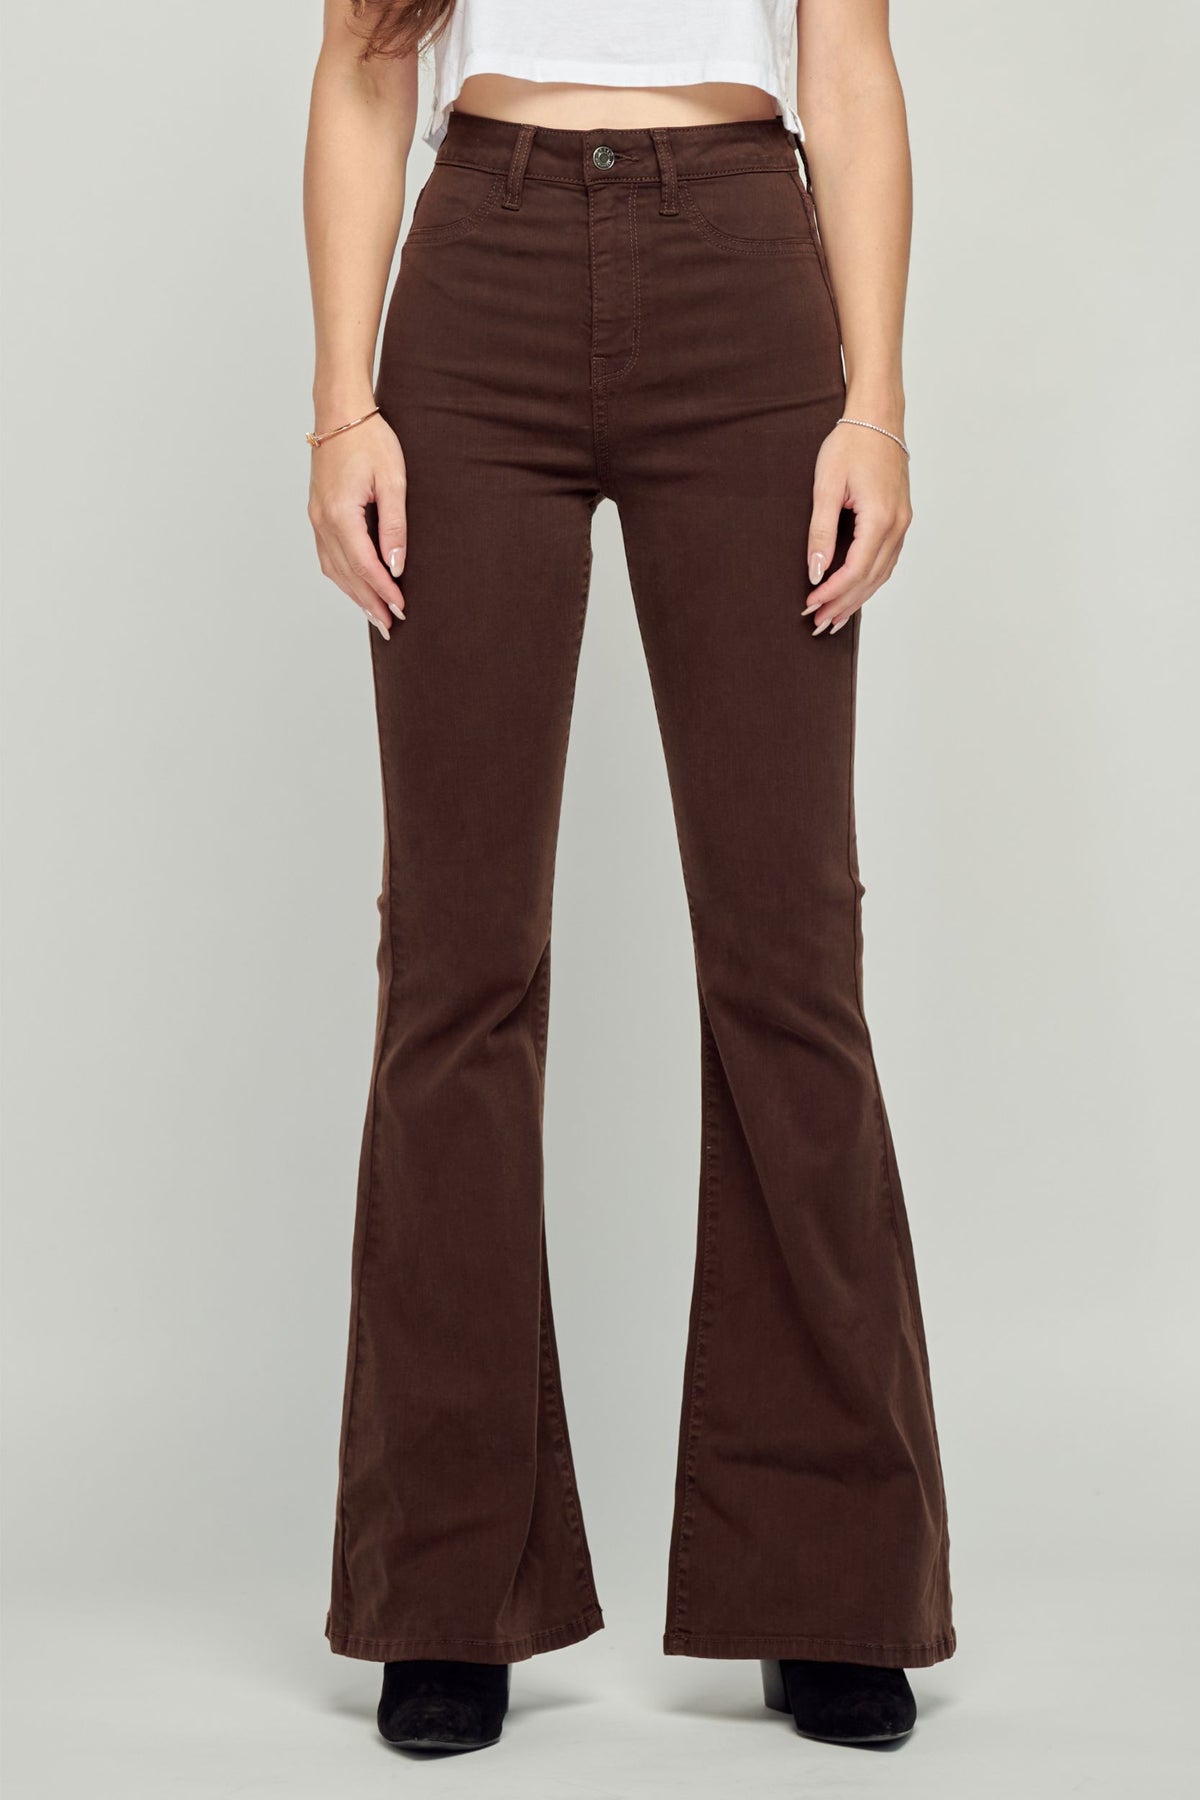 model wearing brown flare pants